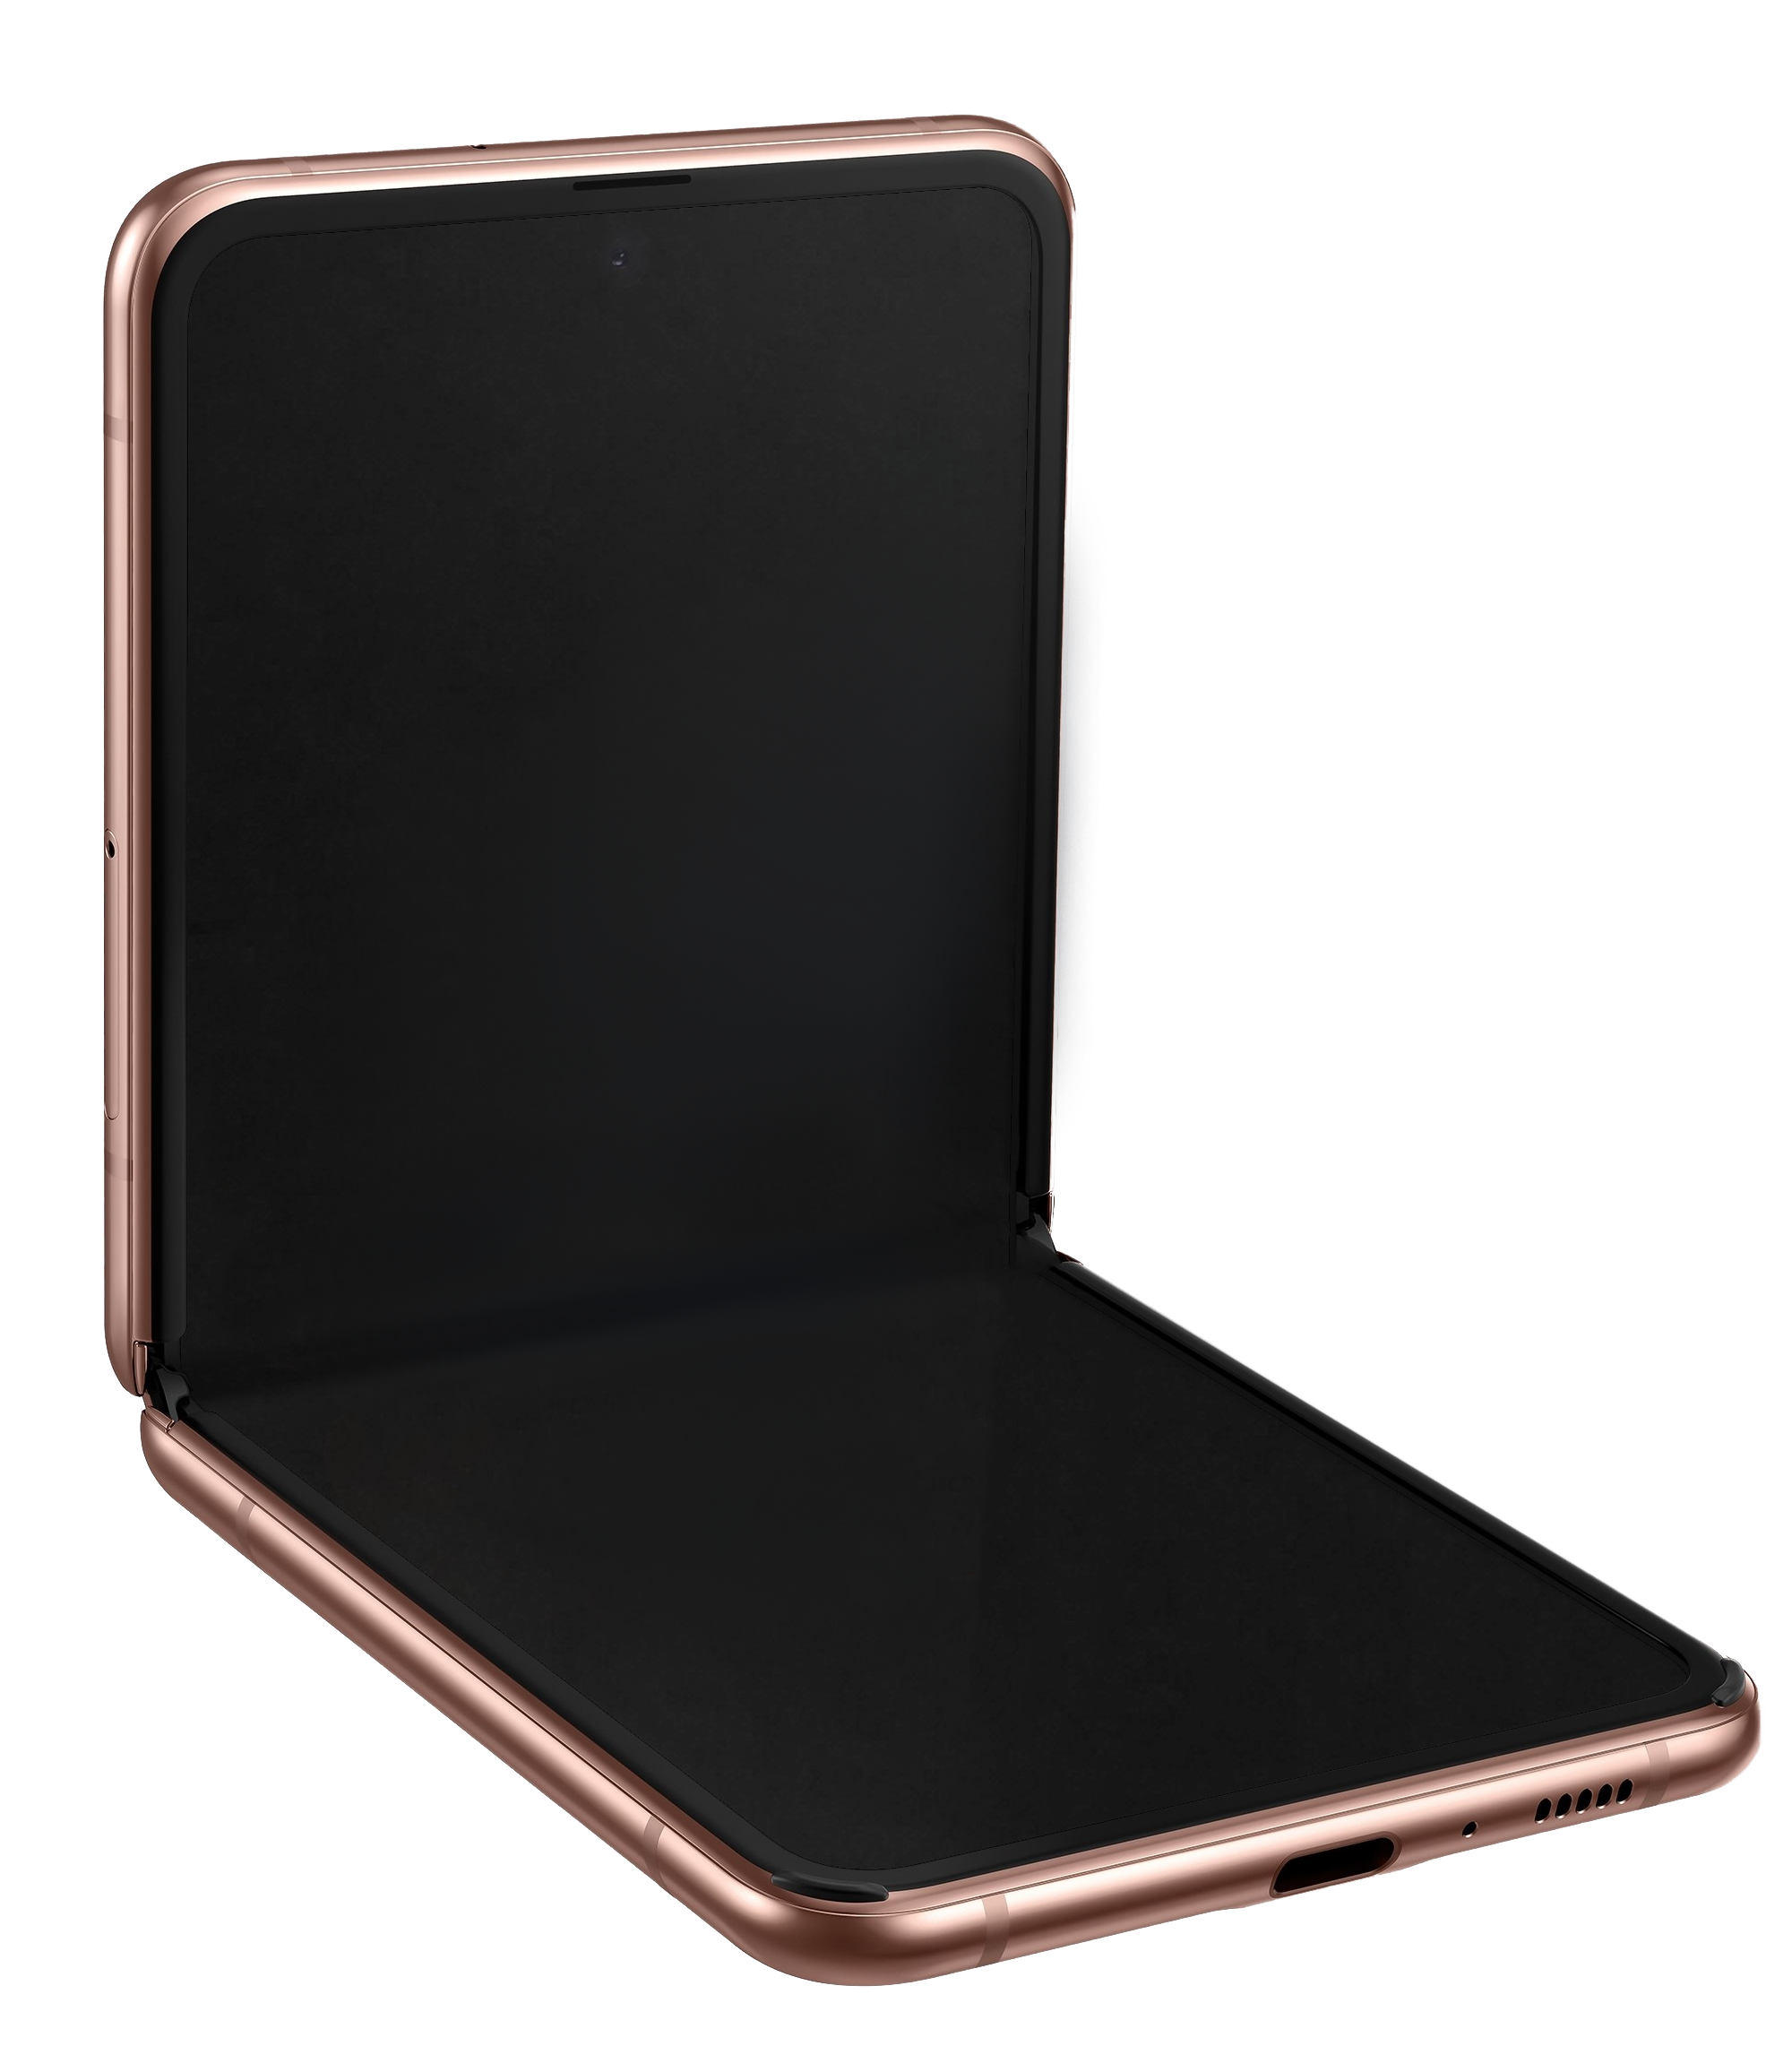 Samsung Galaxy Z Flip 5G Dual-SIM bronze - Ohne Vertrag